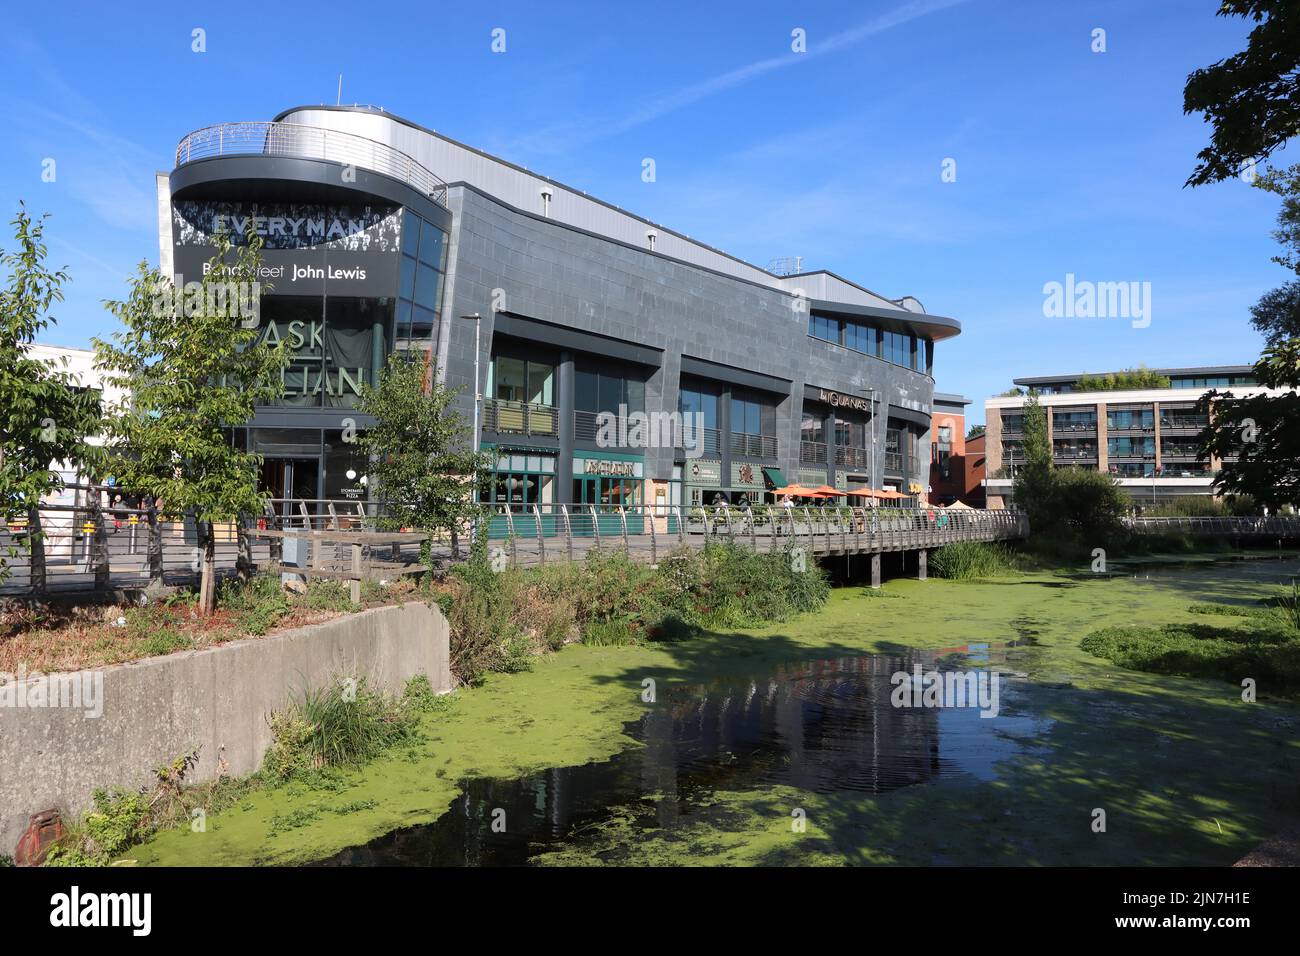 Bond Street retail development, Chelmsford, Essex, UK  - adjacent to the River Chelmer Stock Photo